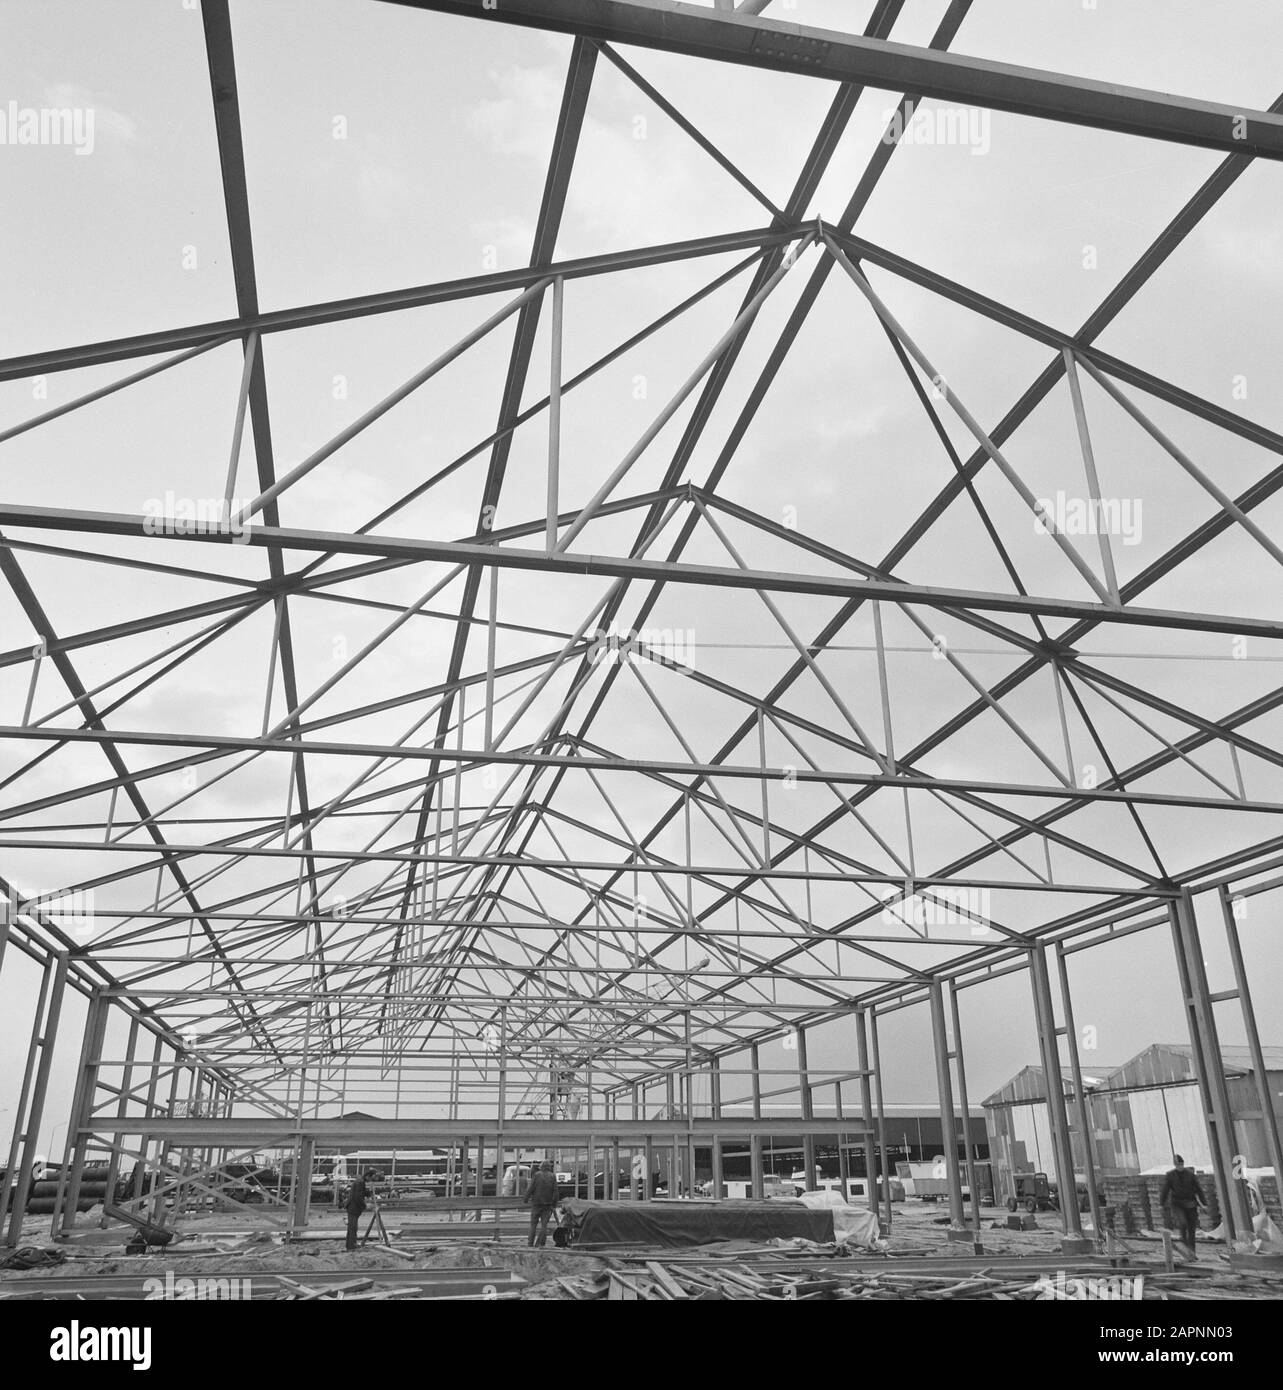 steel constructions Date: November 15, 1972 Location: Kampen Keywords: steel constructions Institution name: NPC Stock Photo